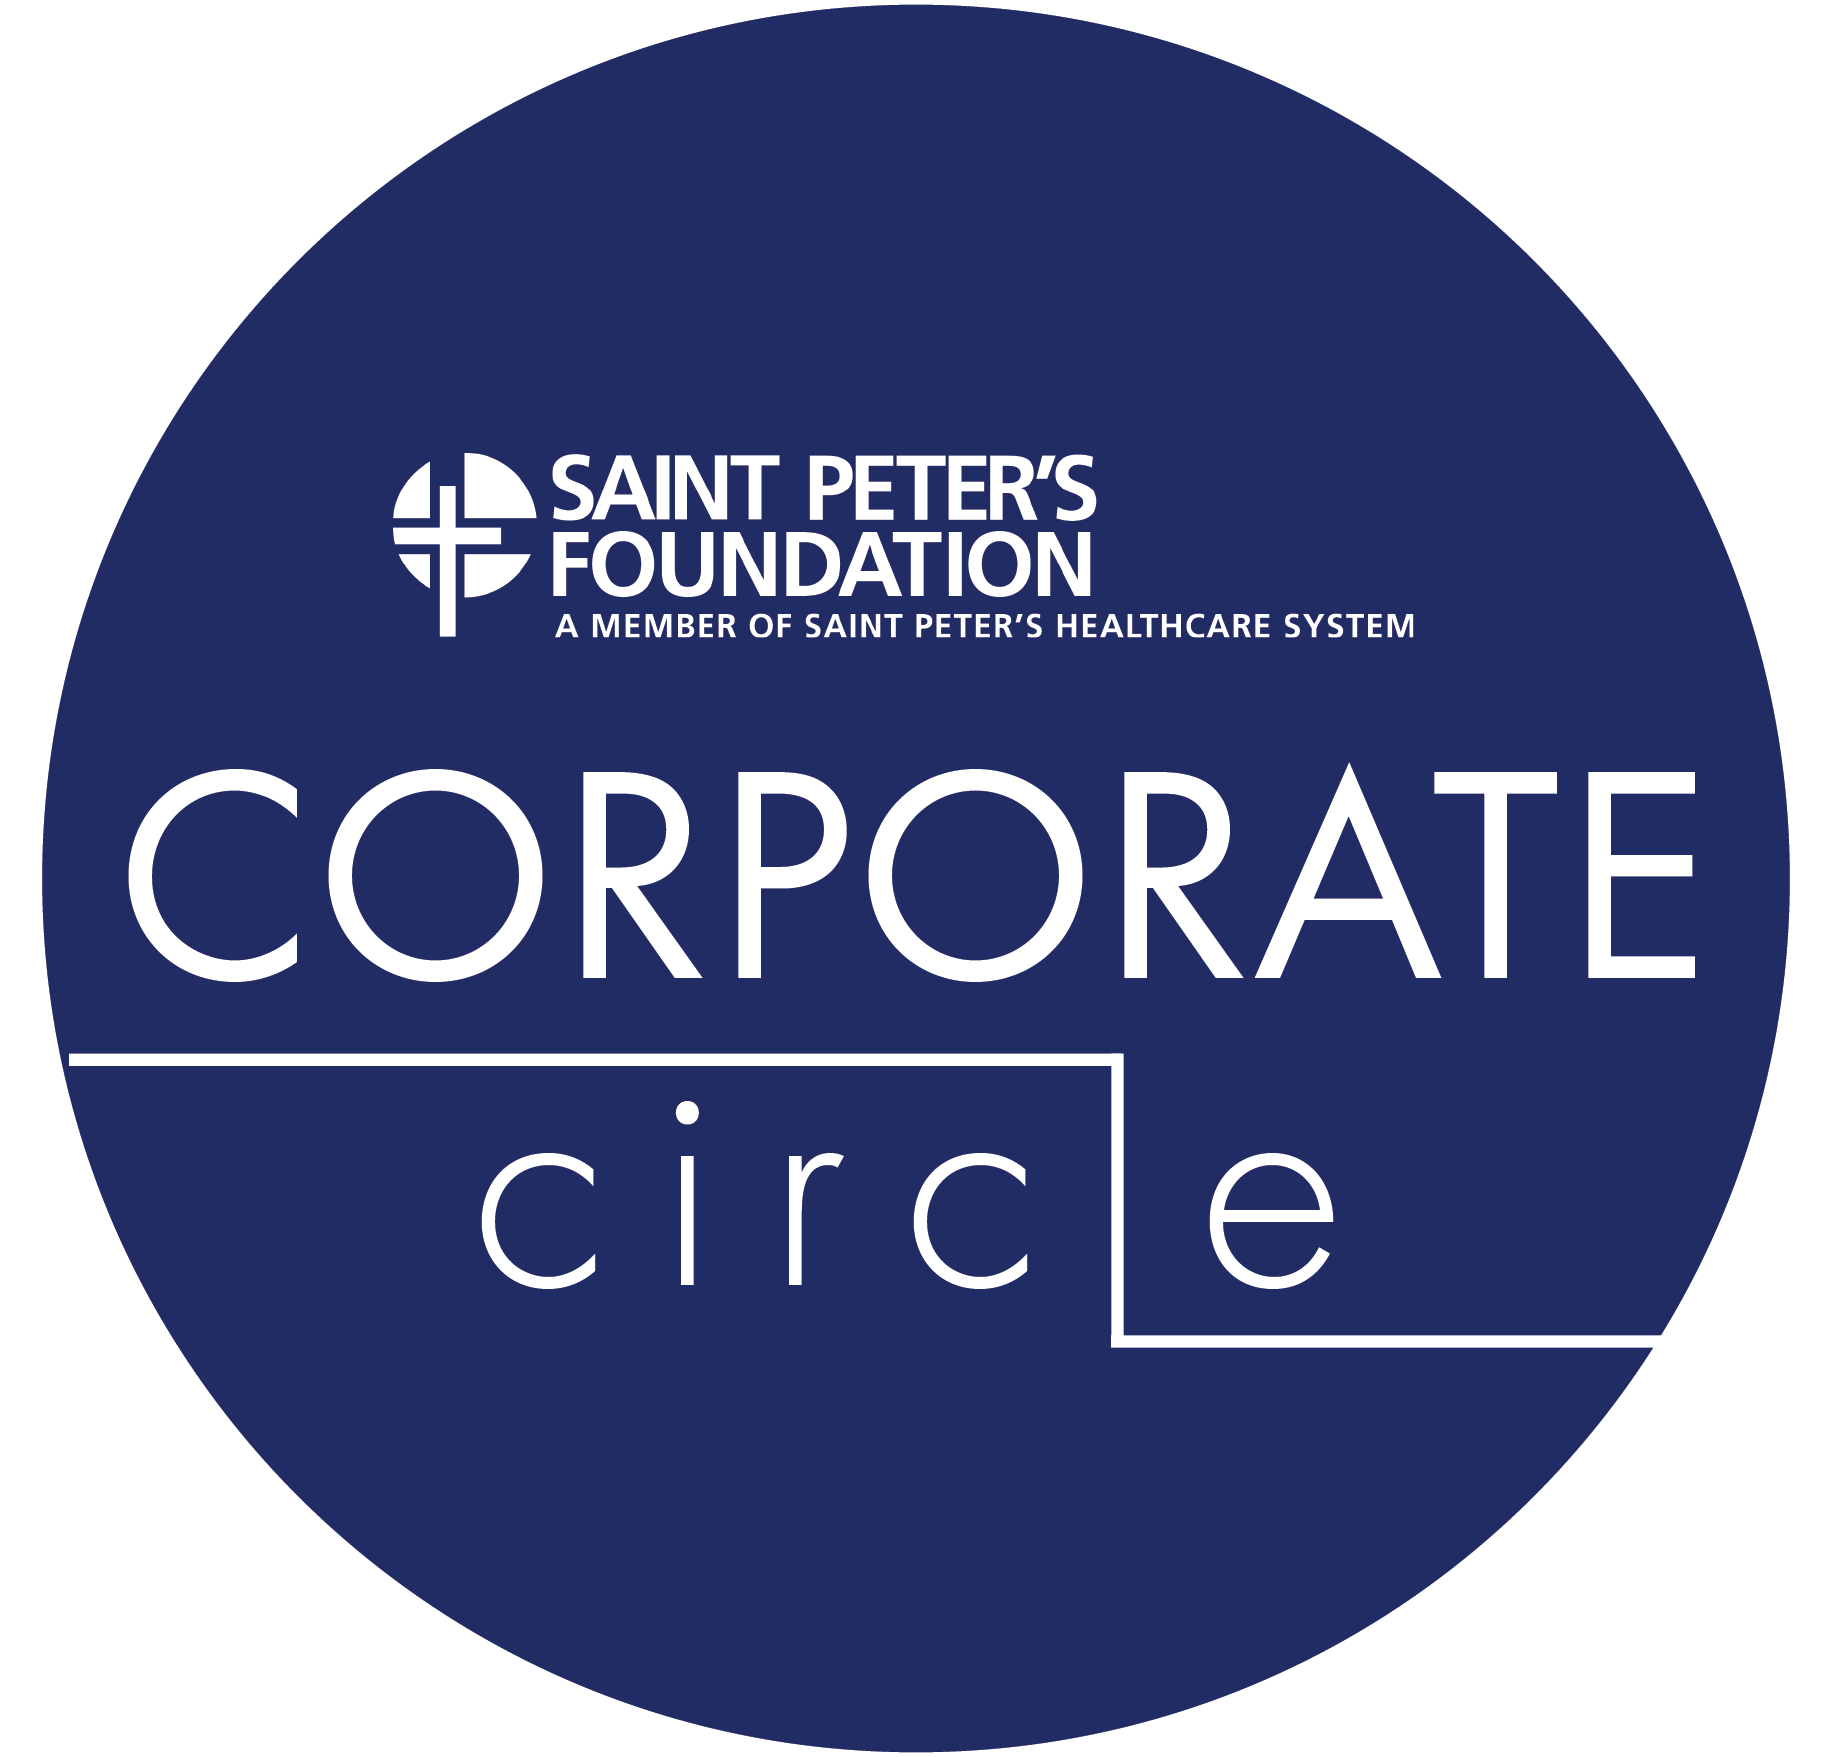 Saint Peter's Foundation Corporate Circle logo